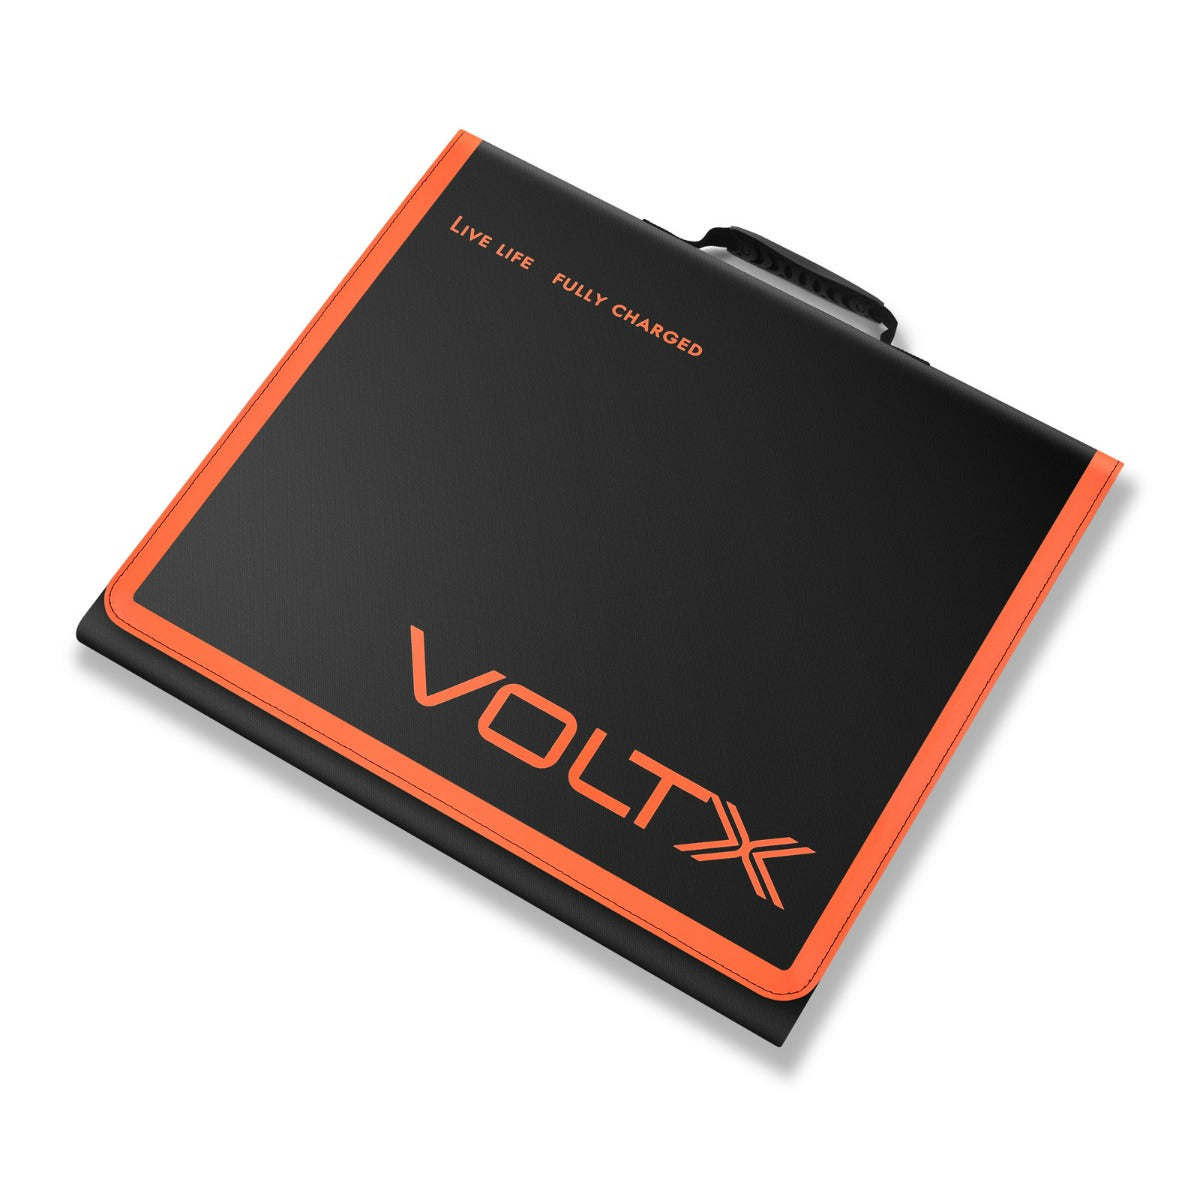 VoltX 12V 160W Mono Solar Blanket Folding Solar Panel Kit Portable Camping